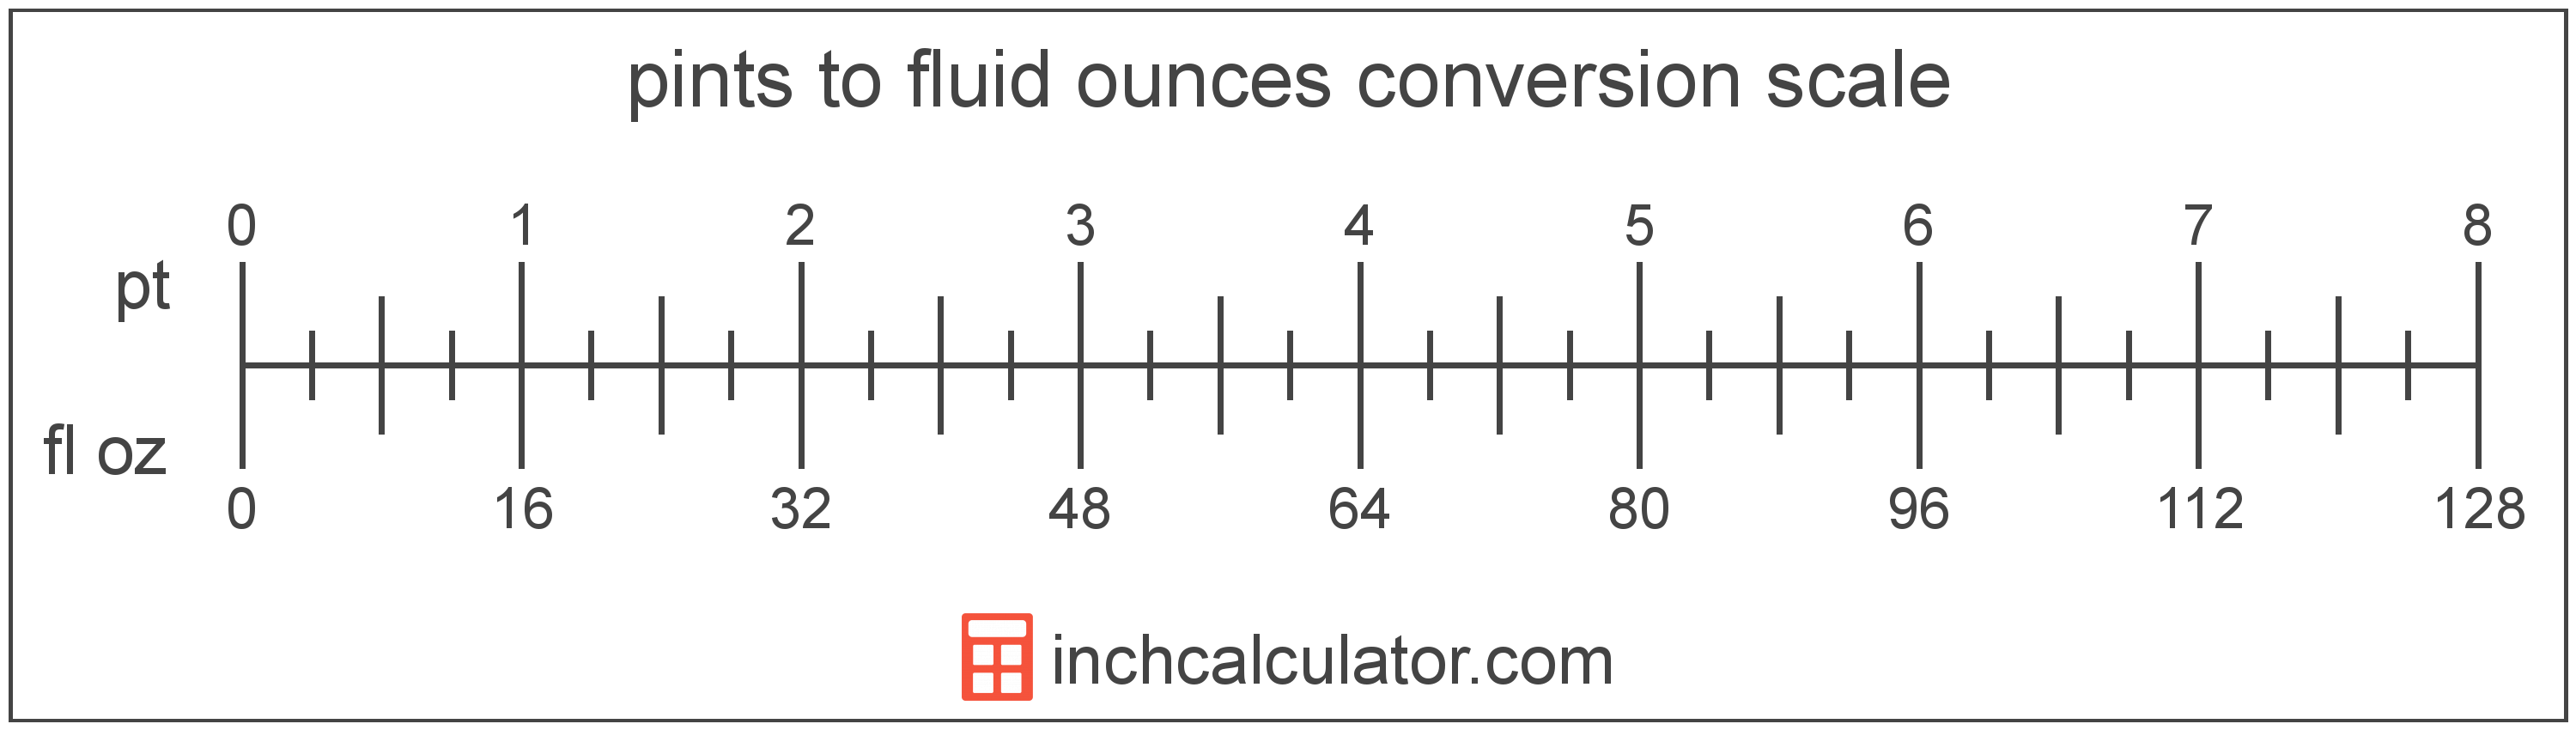 conversion scale showing fluid ounces and equivalent pints volume values